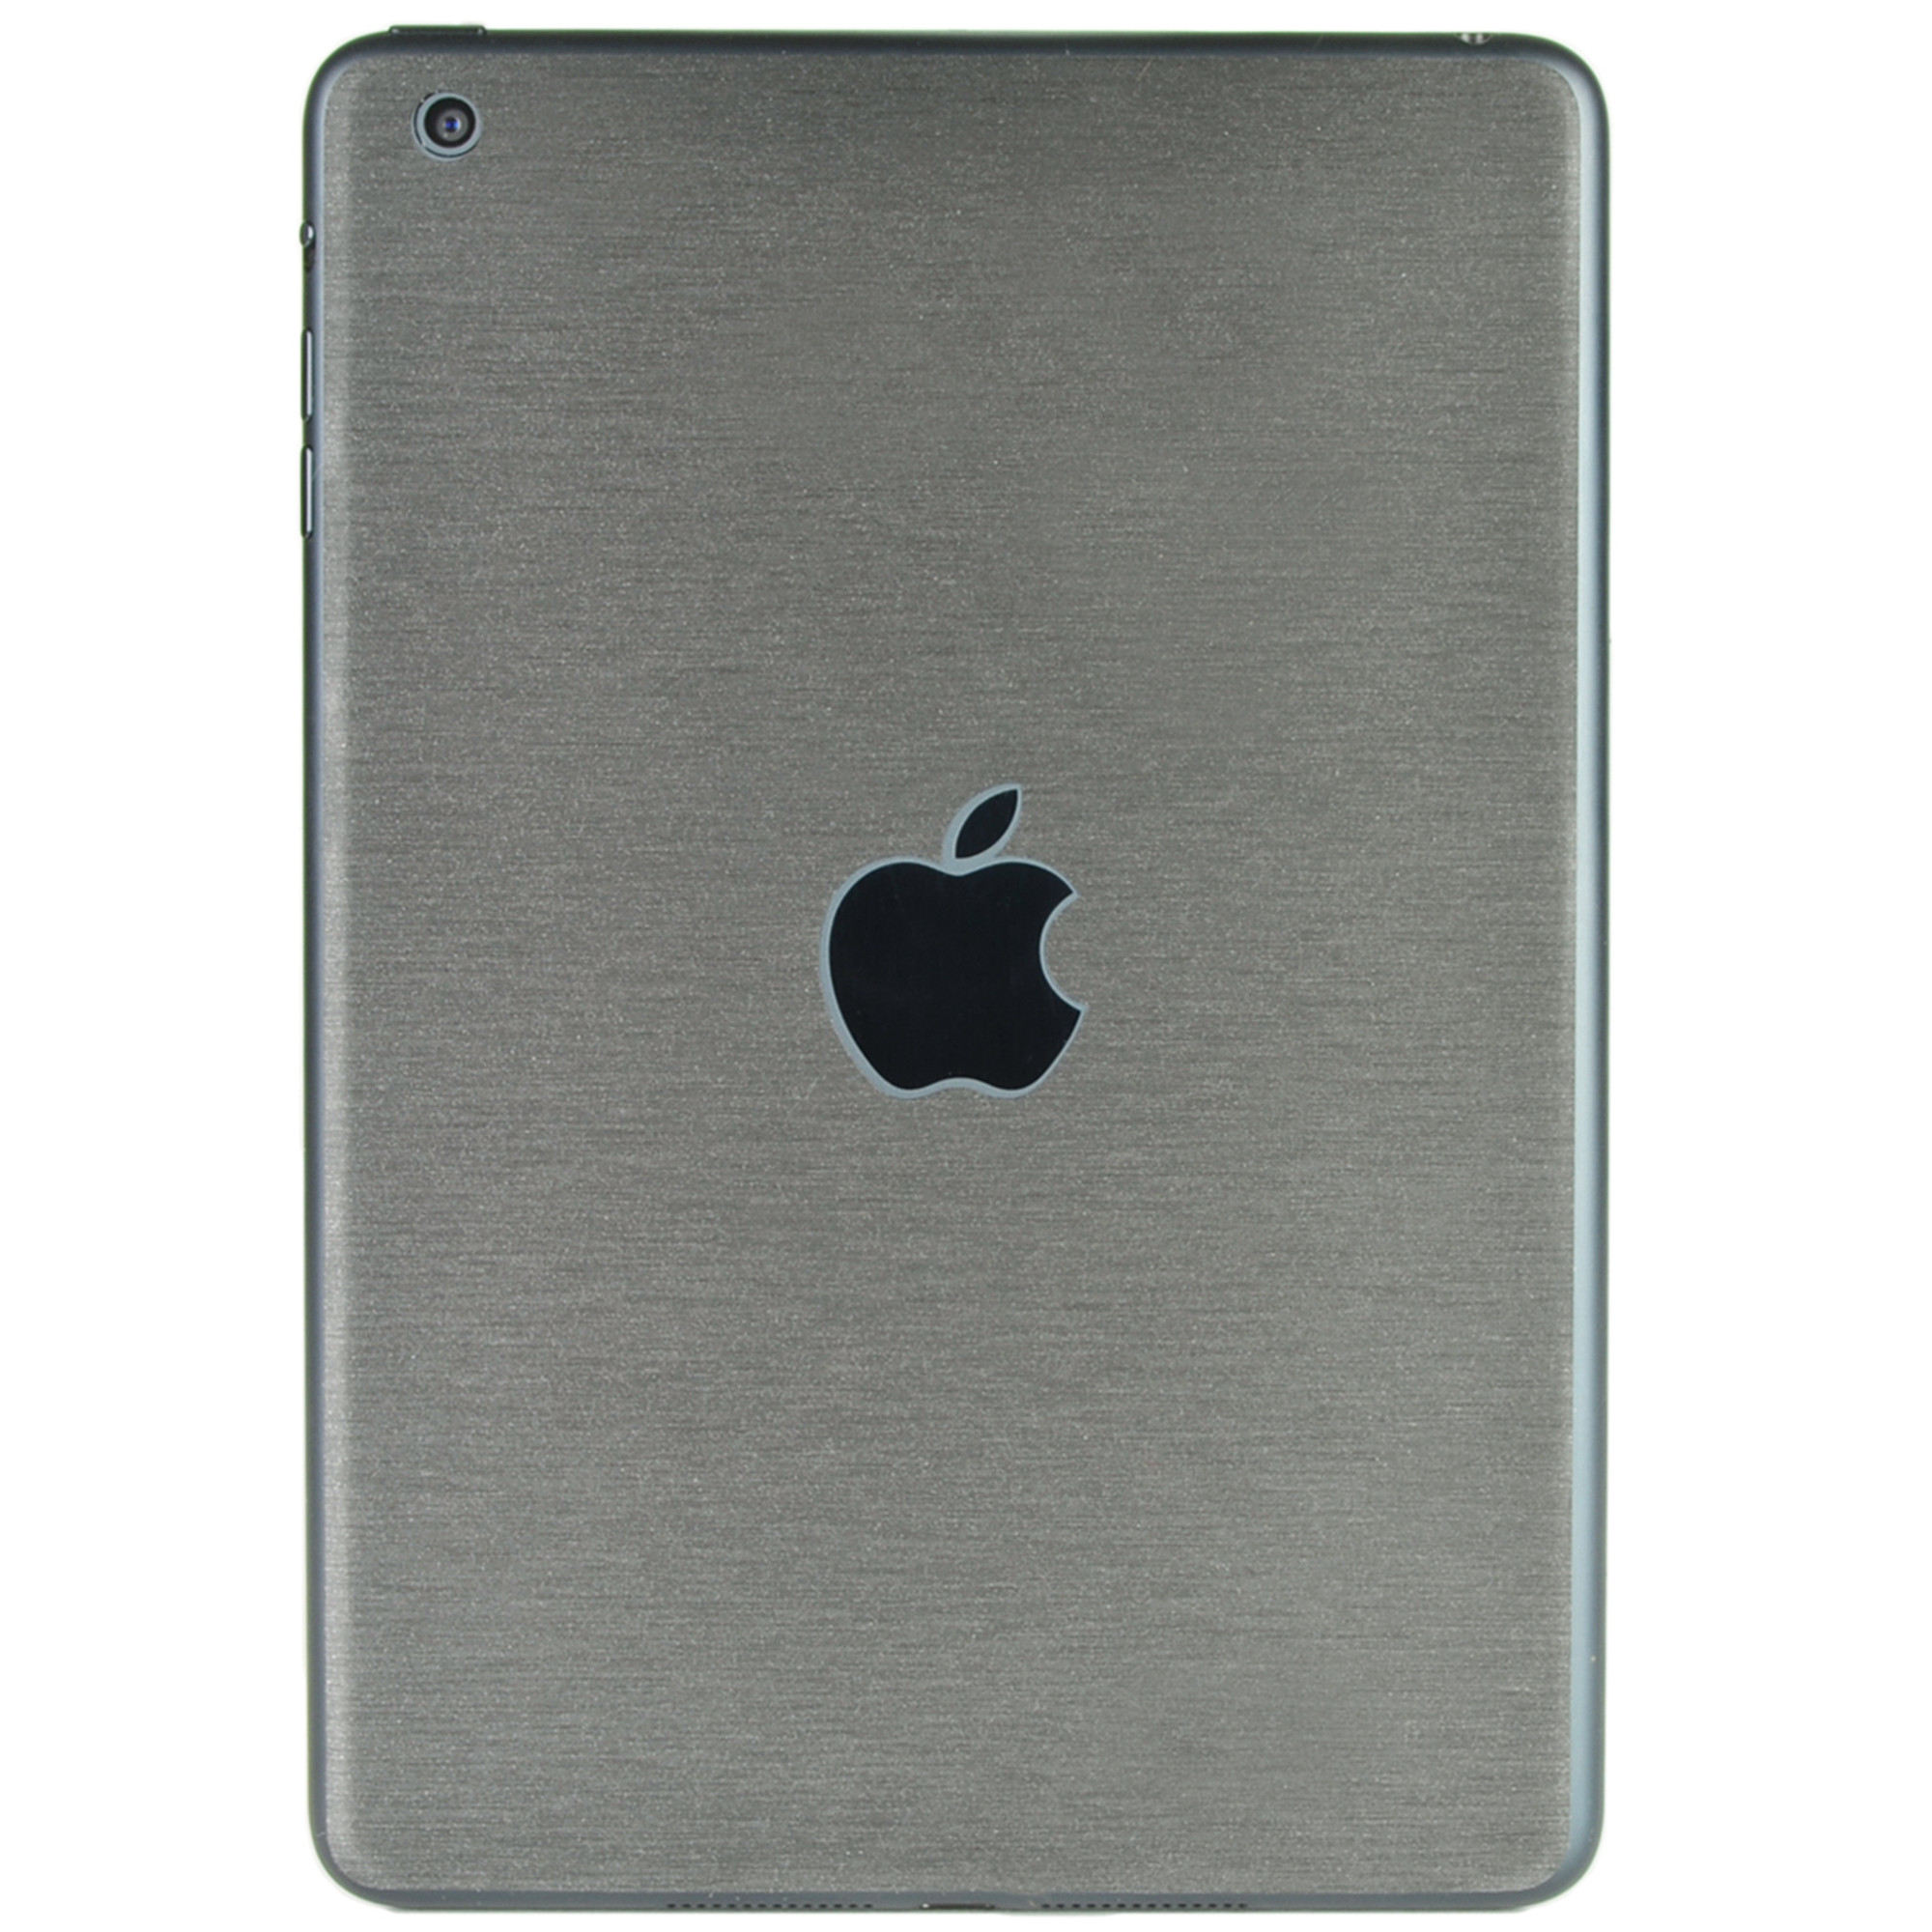 Tablet Apple iPad Mini 16GB Wifi-Negro